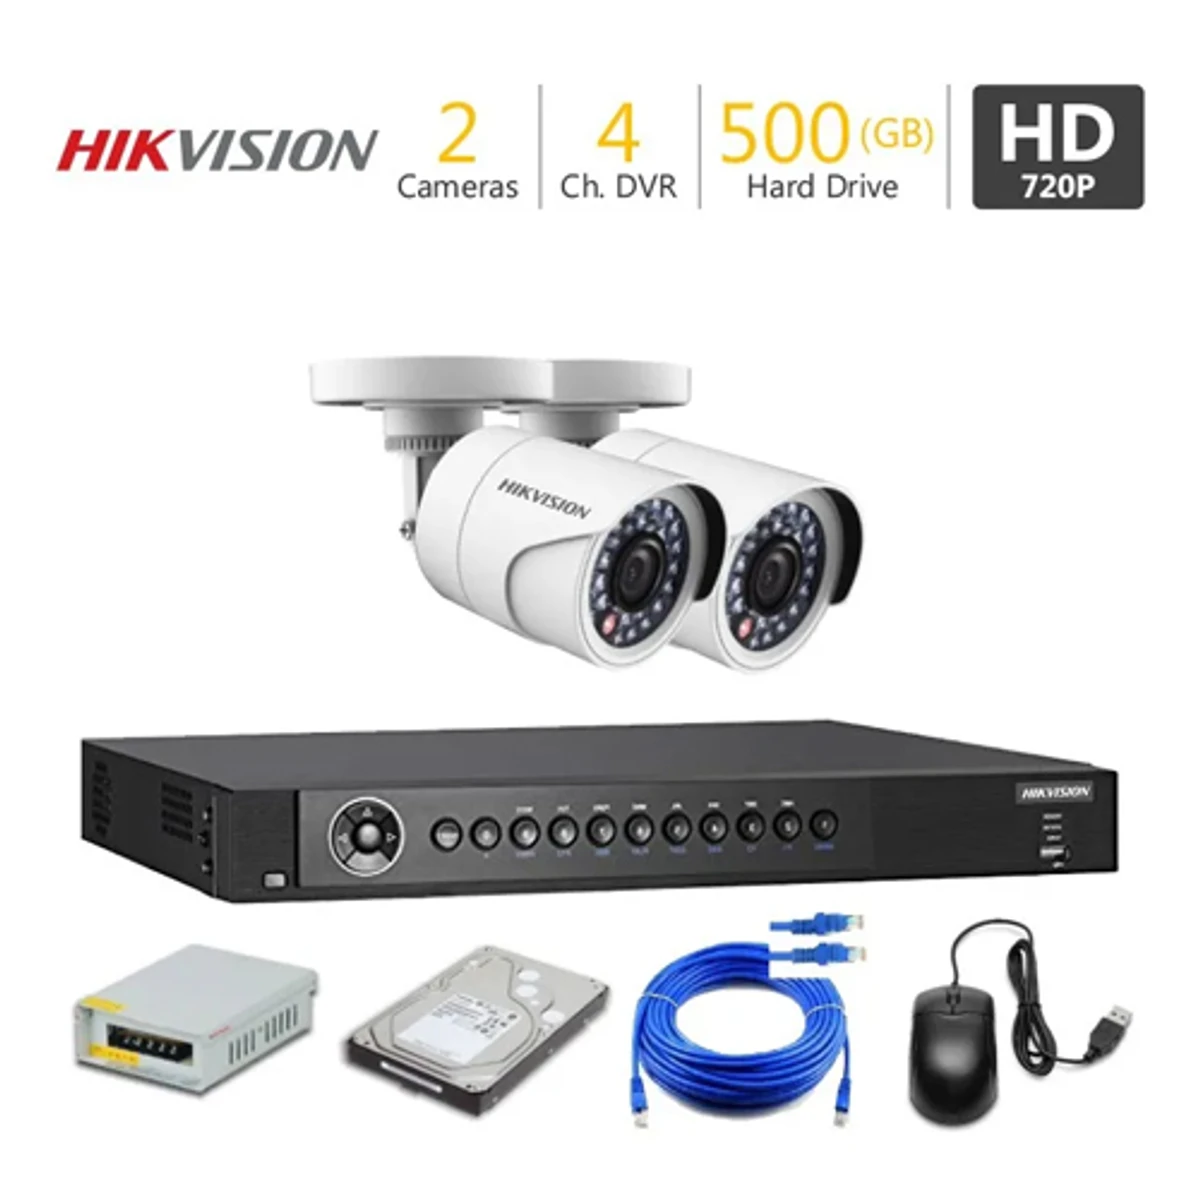 HIKvision 2 Channel CCTV Camera